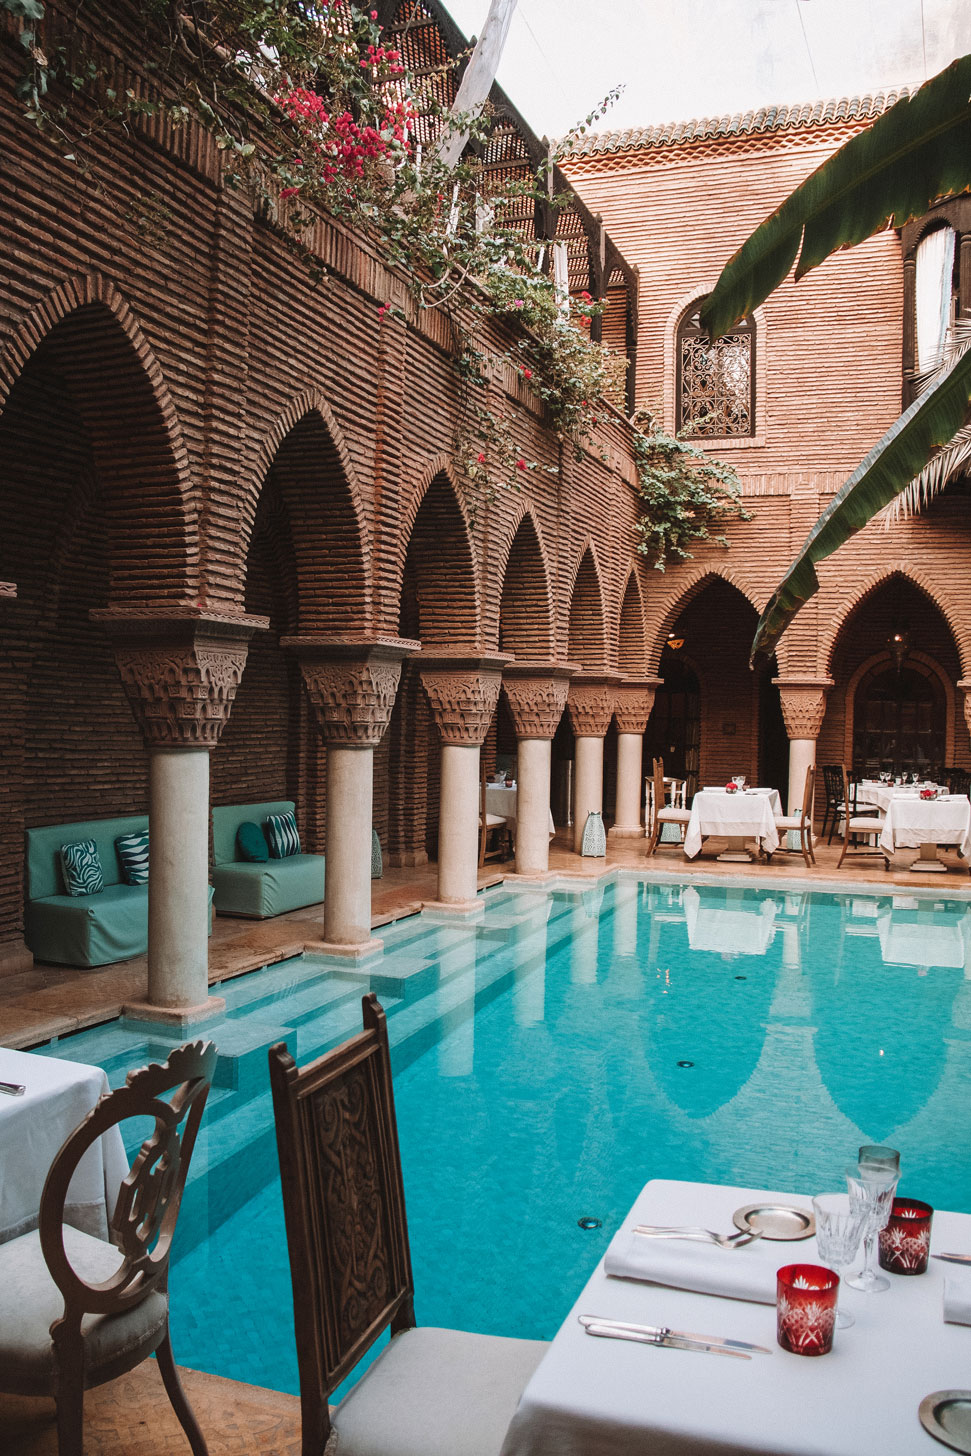 The Main Pool At La Sultana Marrakech